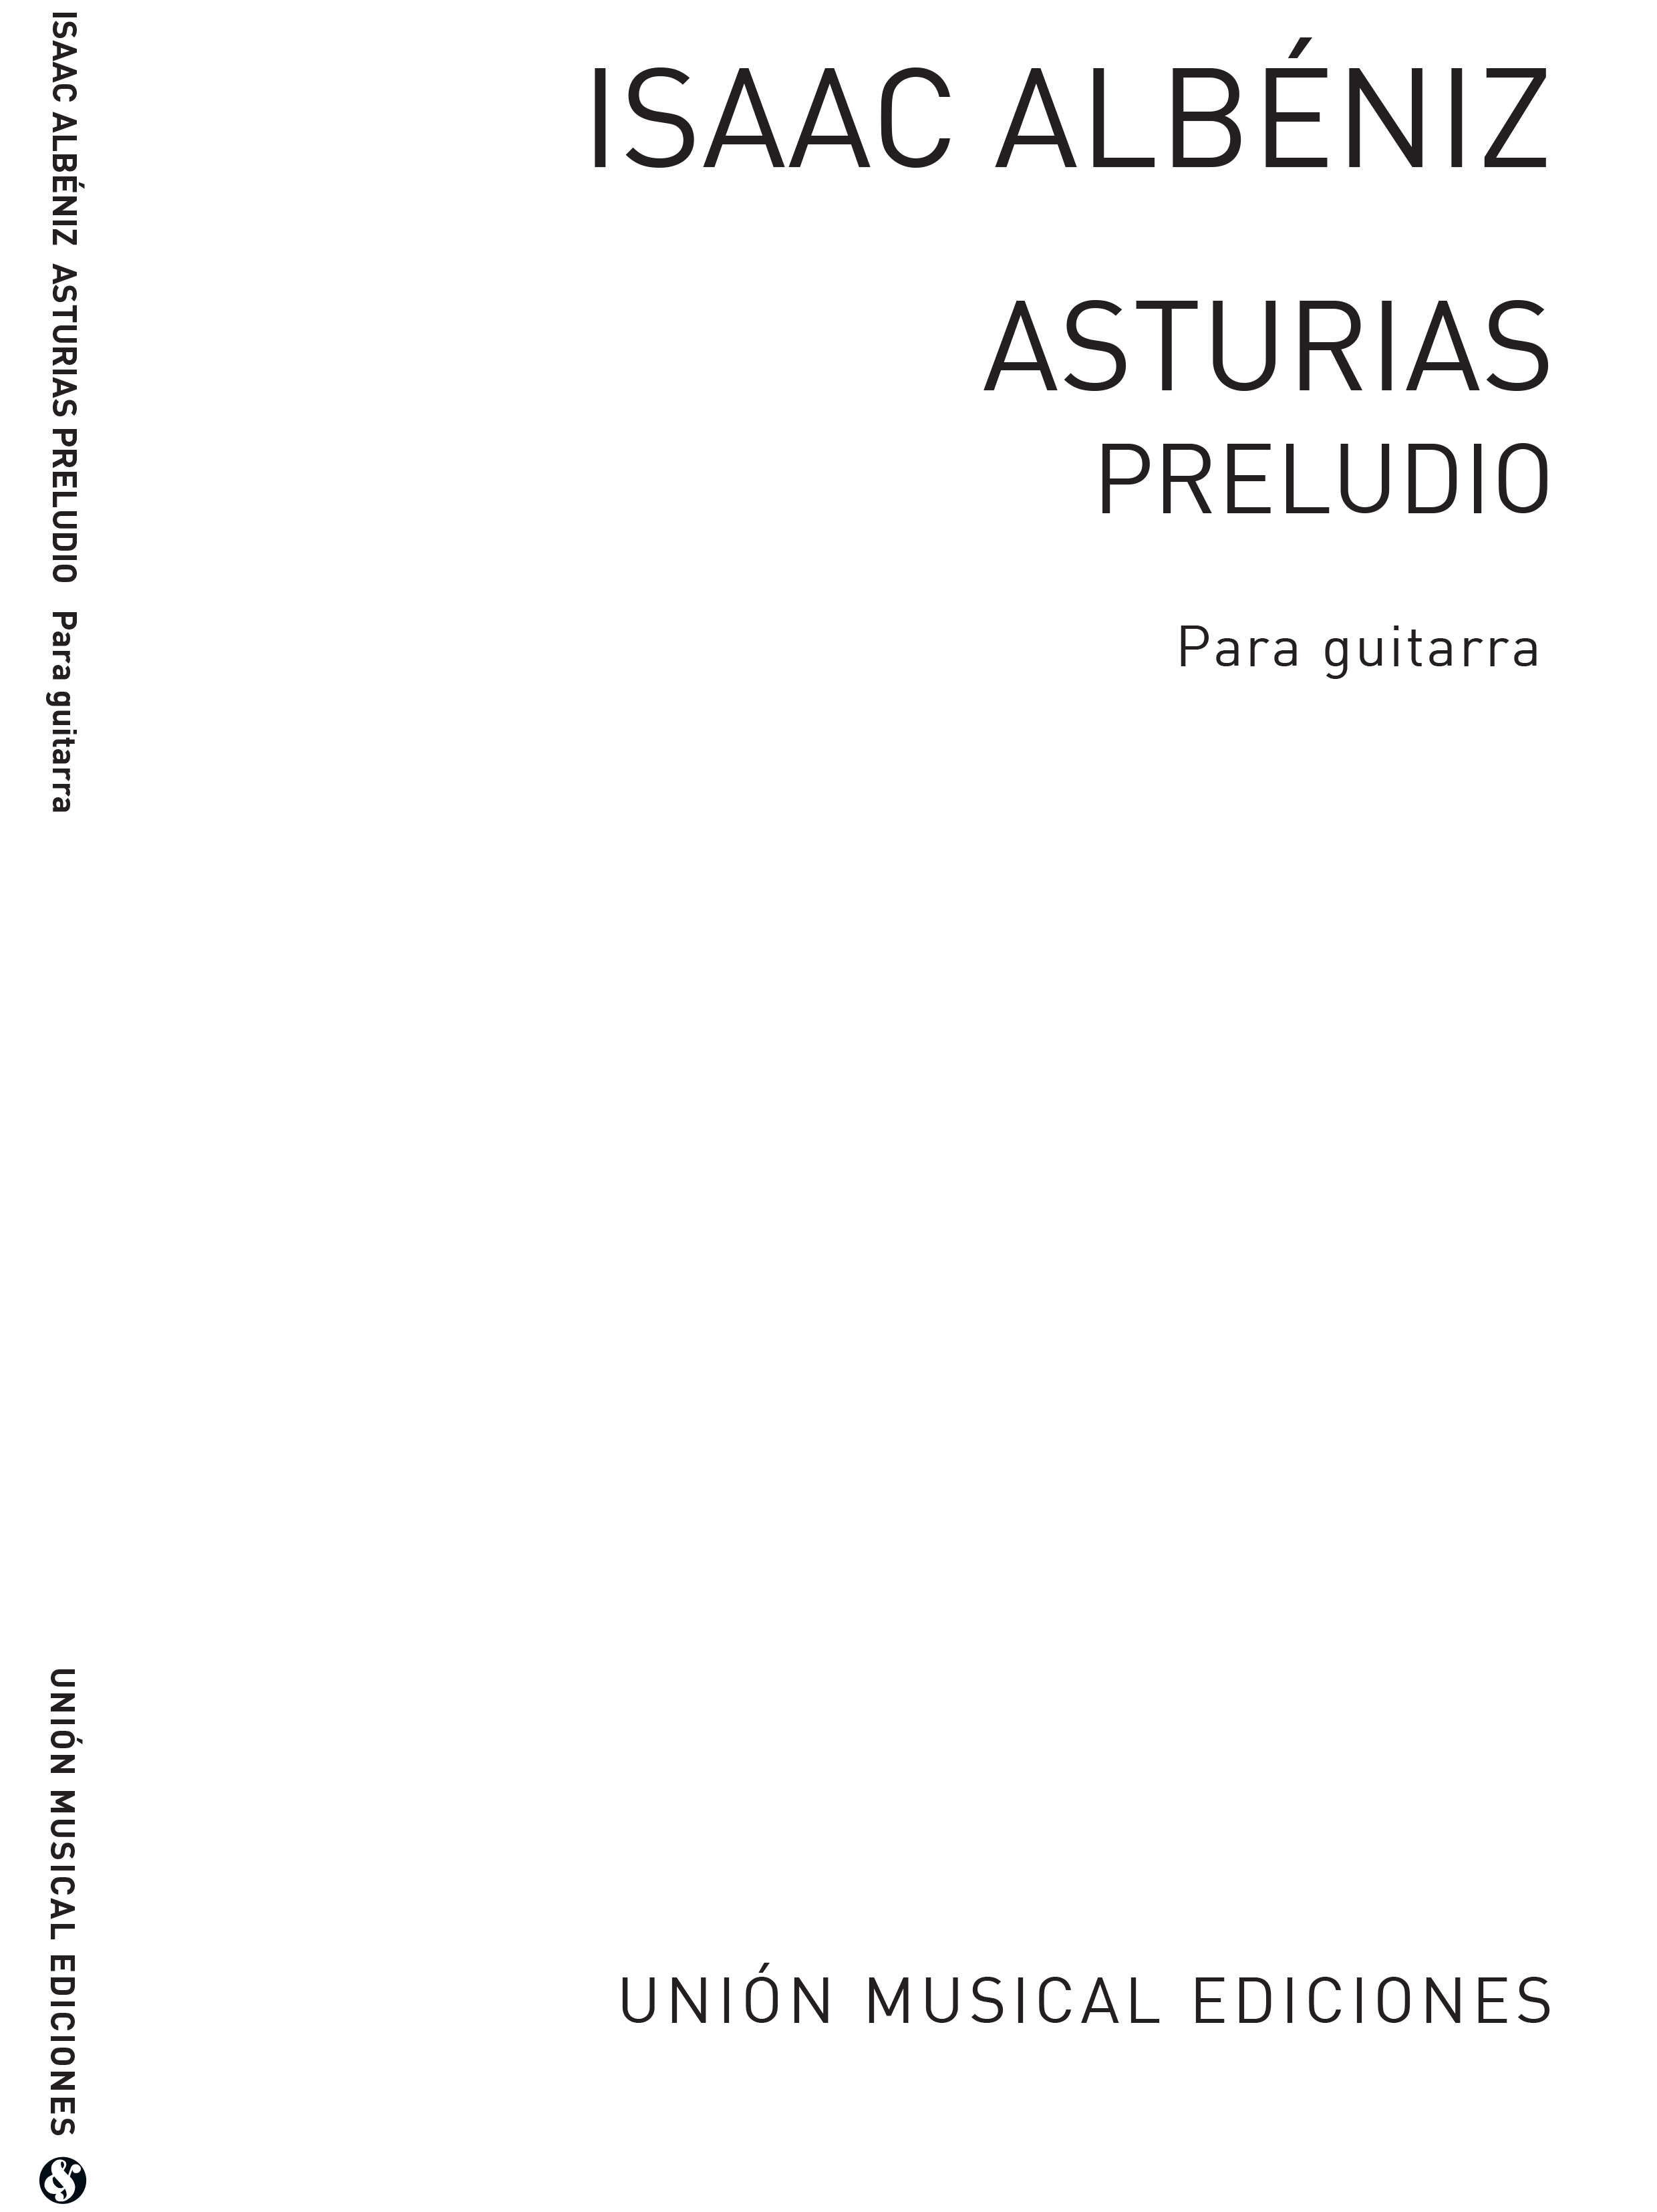 asturias guitare partition sheet music